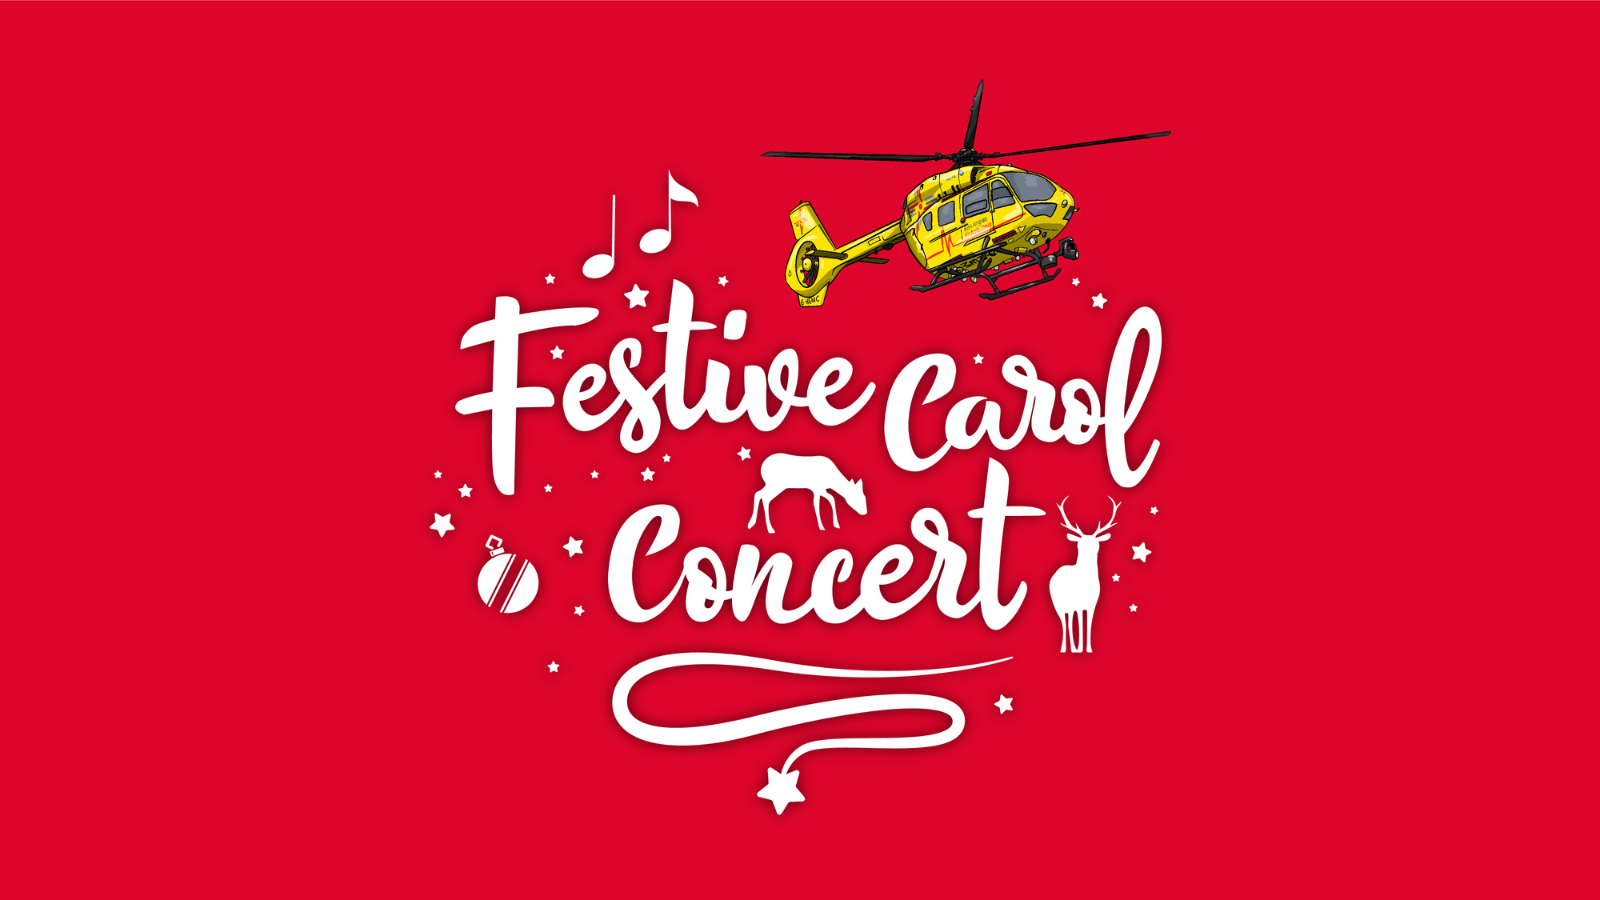 Festive Carol Concert